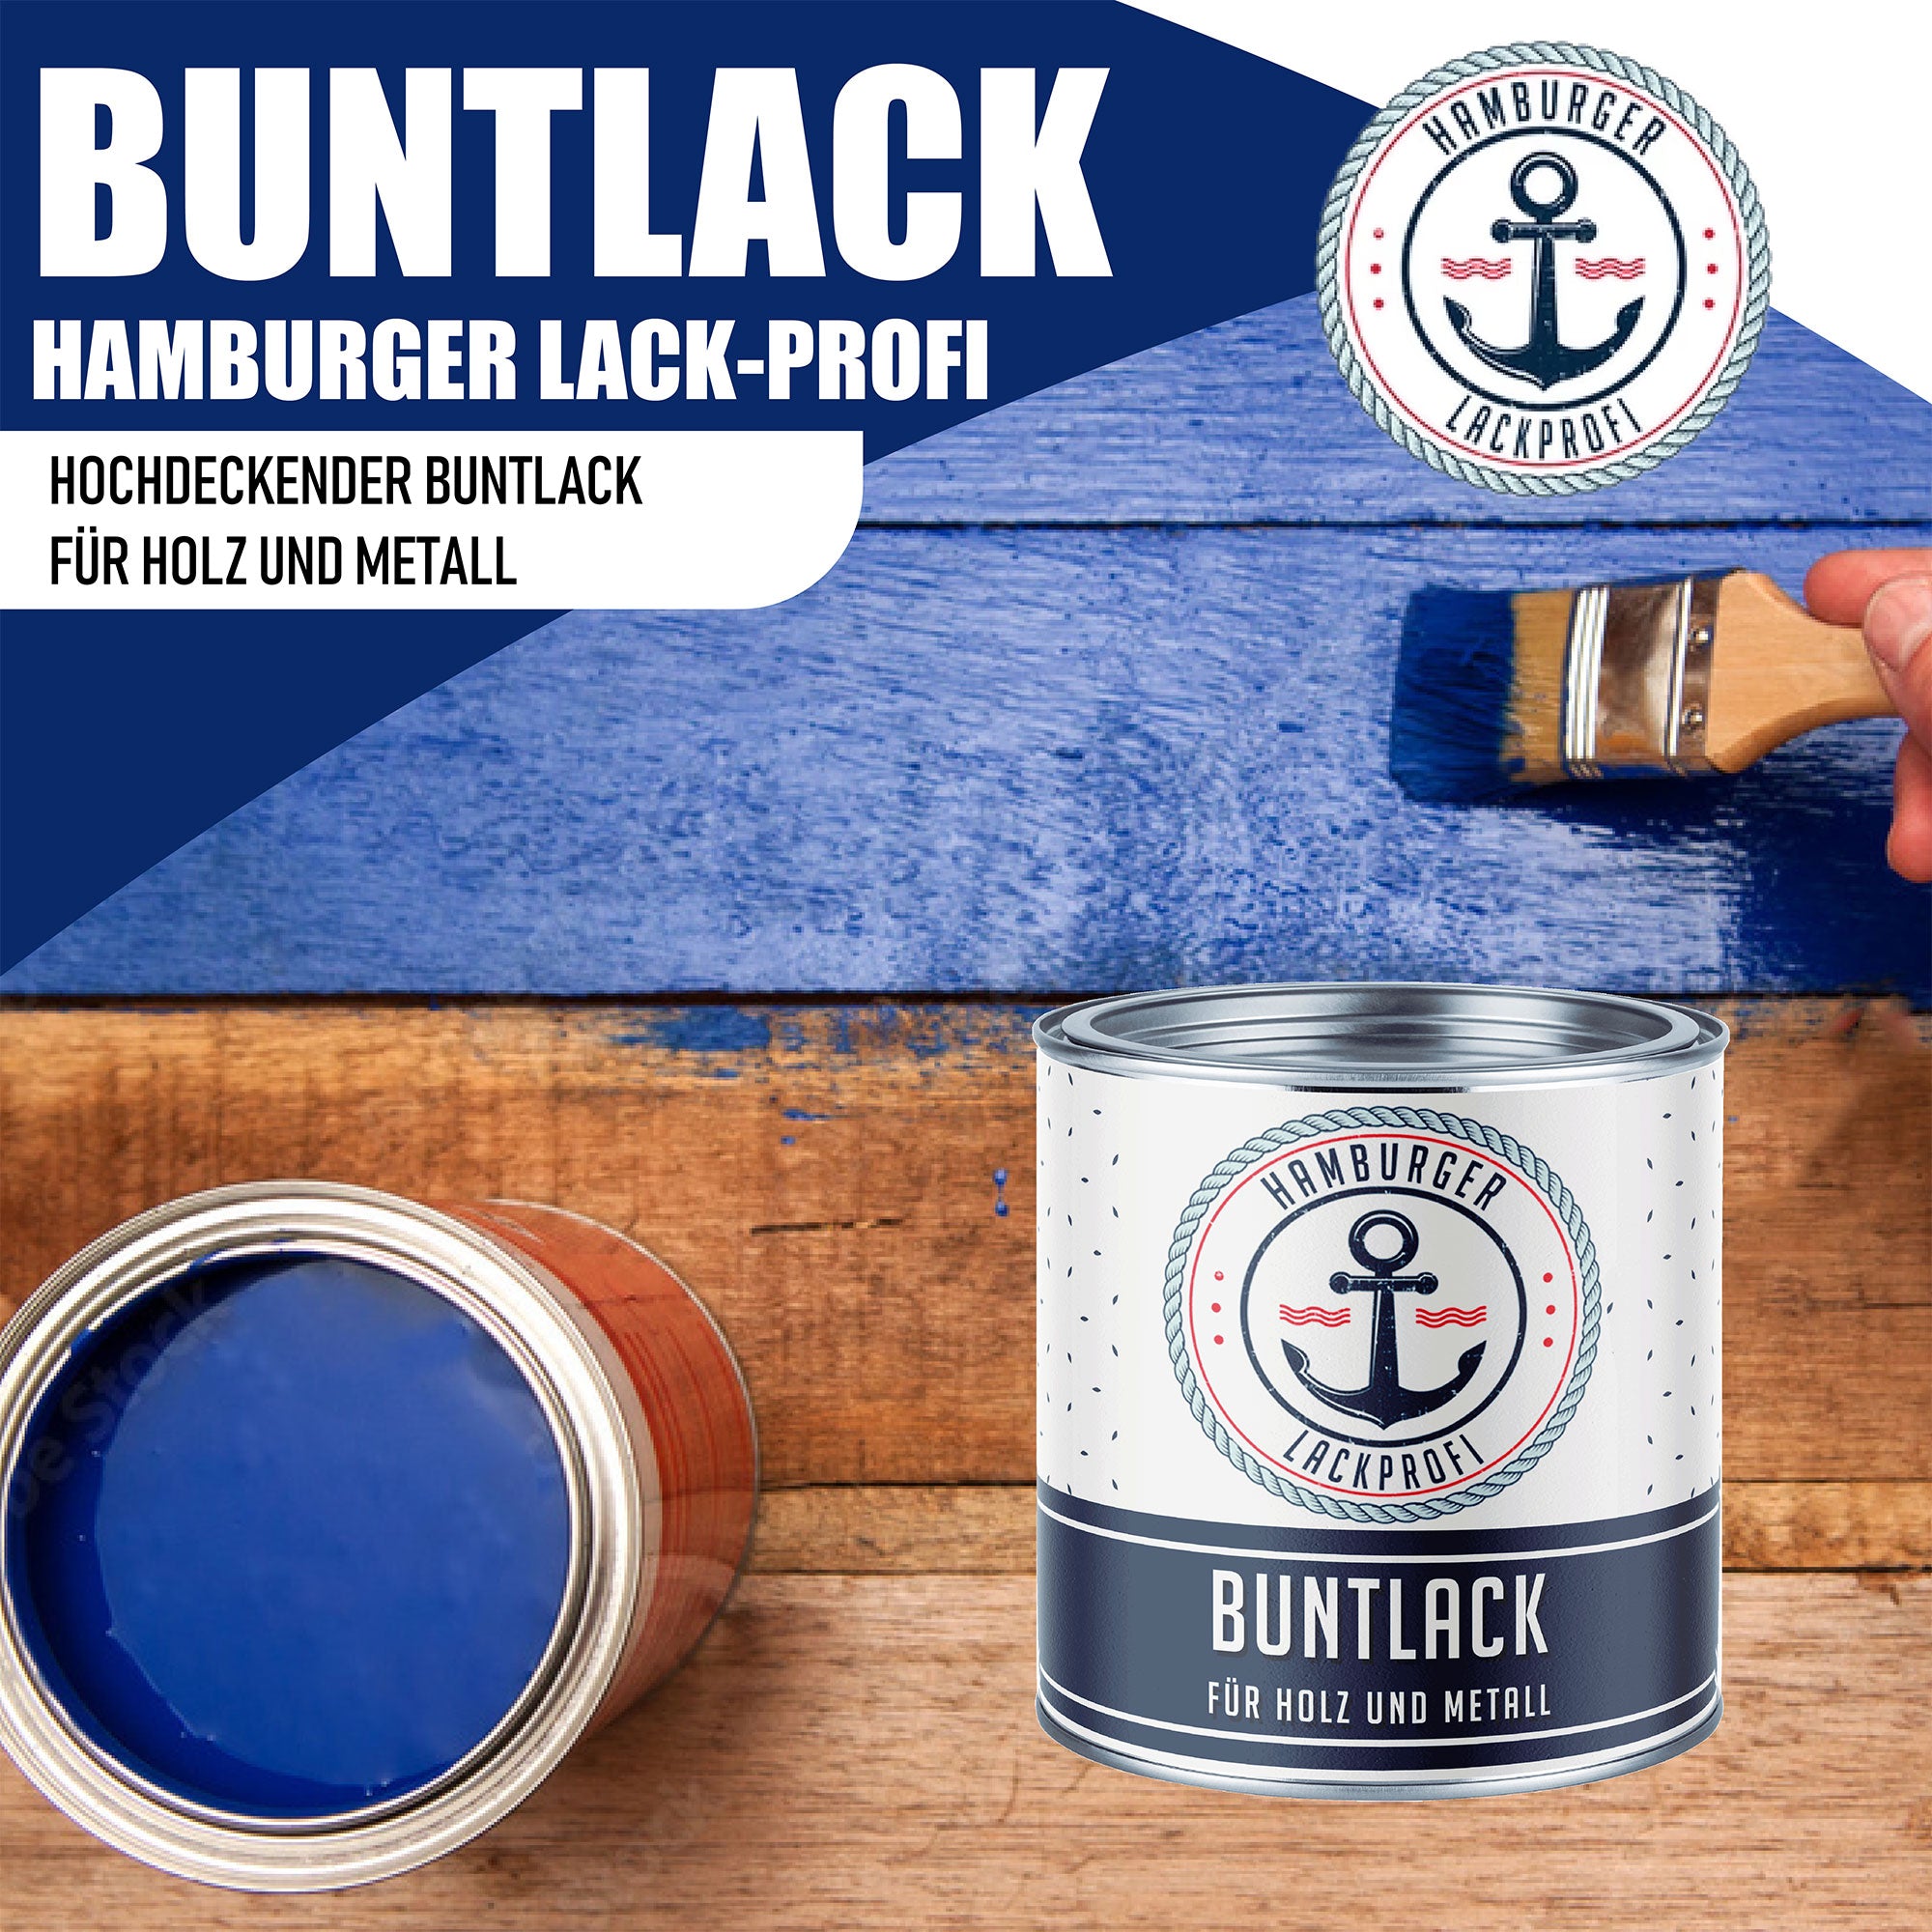 Hamburger Lack-Profi Buntlack Blaßgrün RAL 6021 - Robuster Kunstharzlack